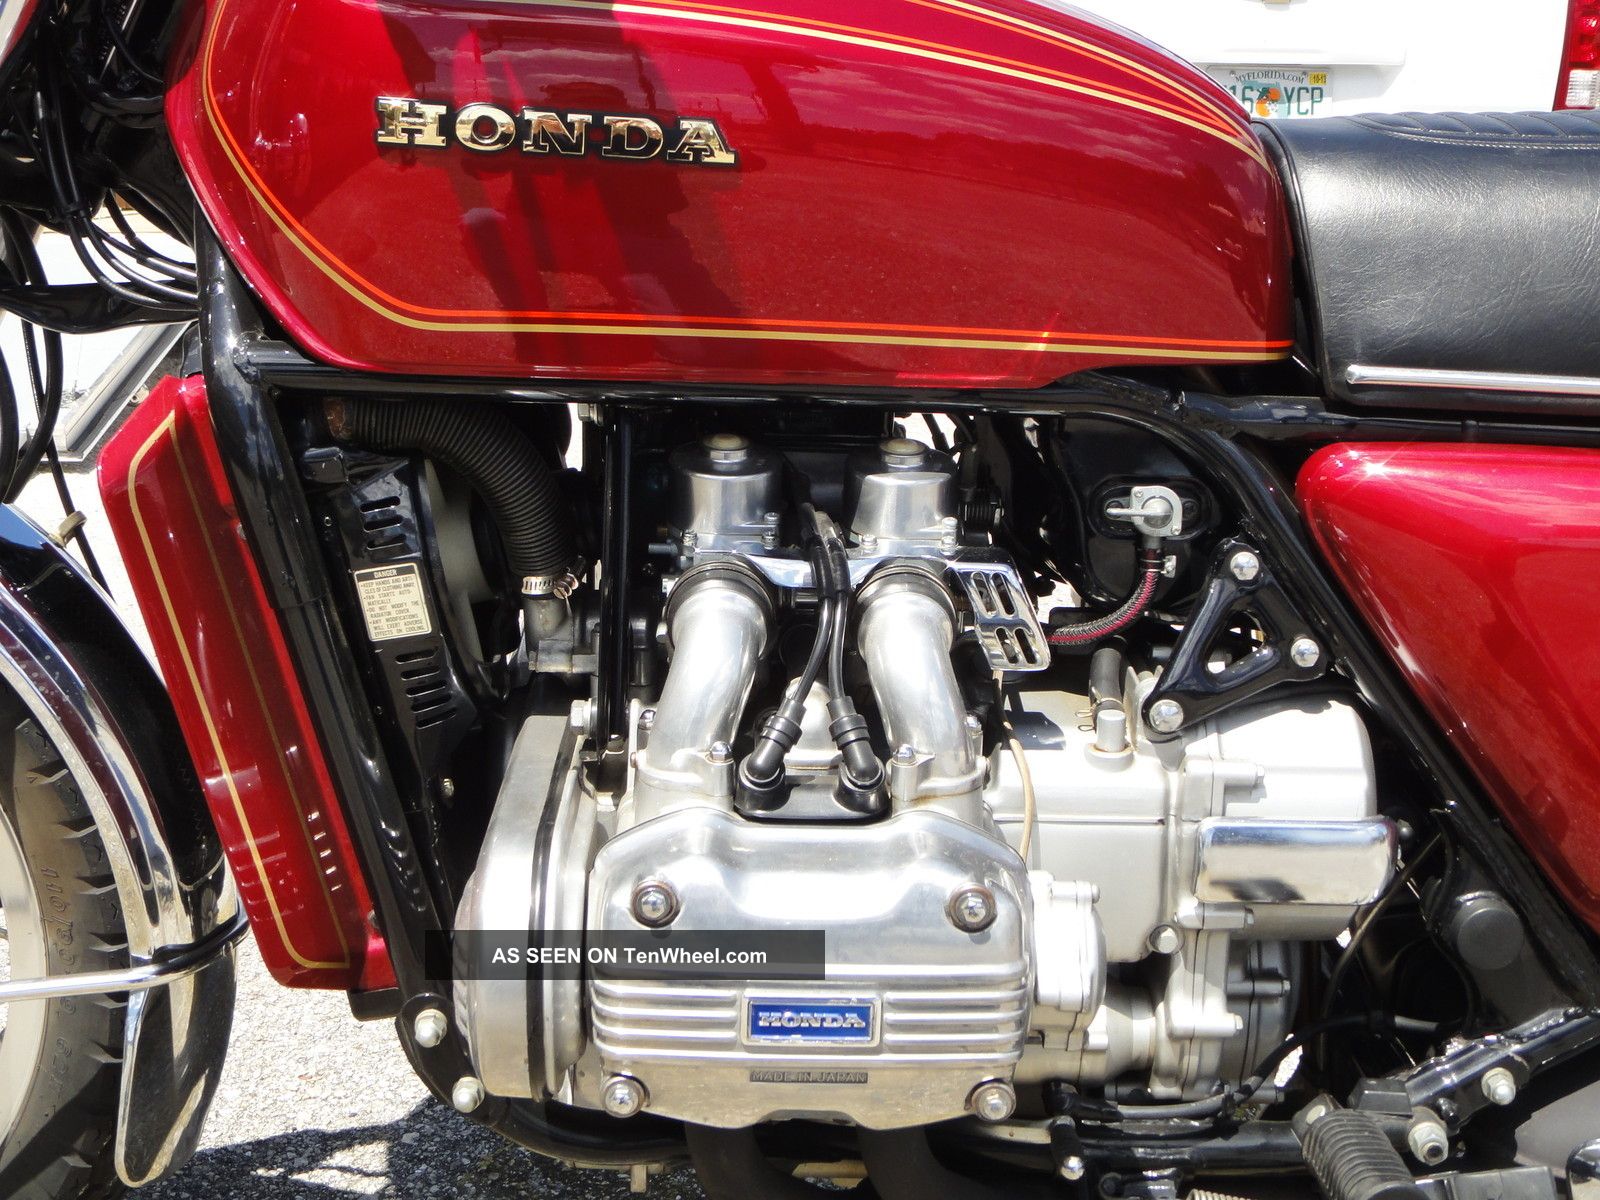 1975 Honda goldwing engine specs #6